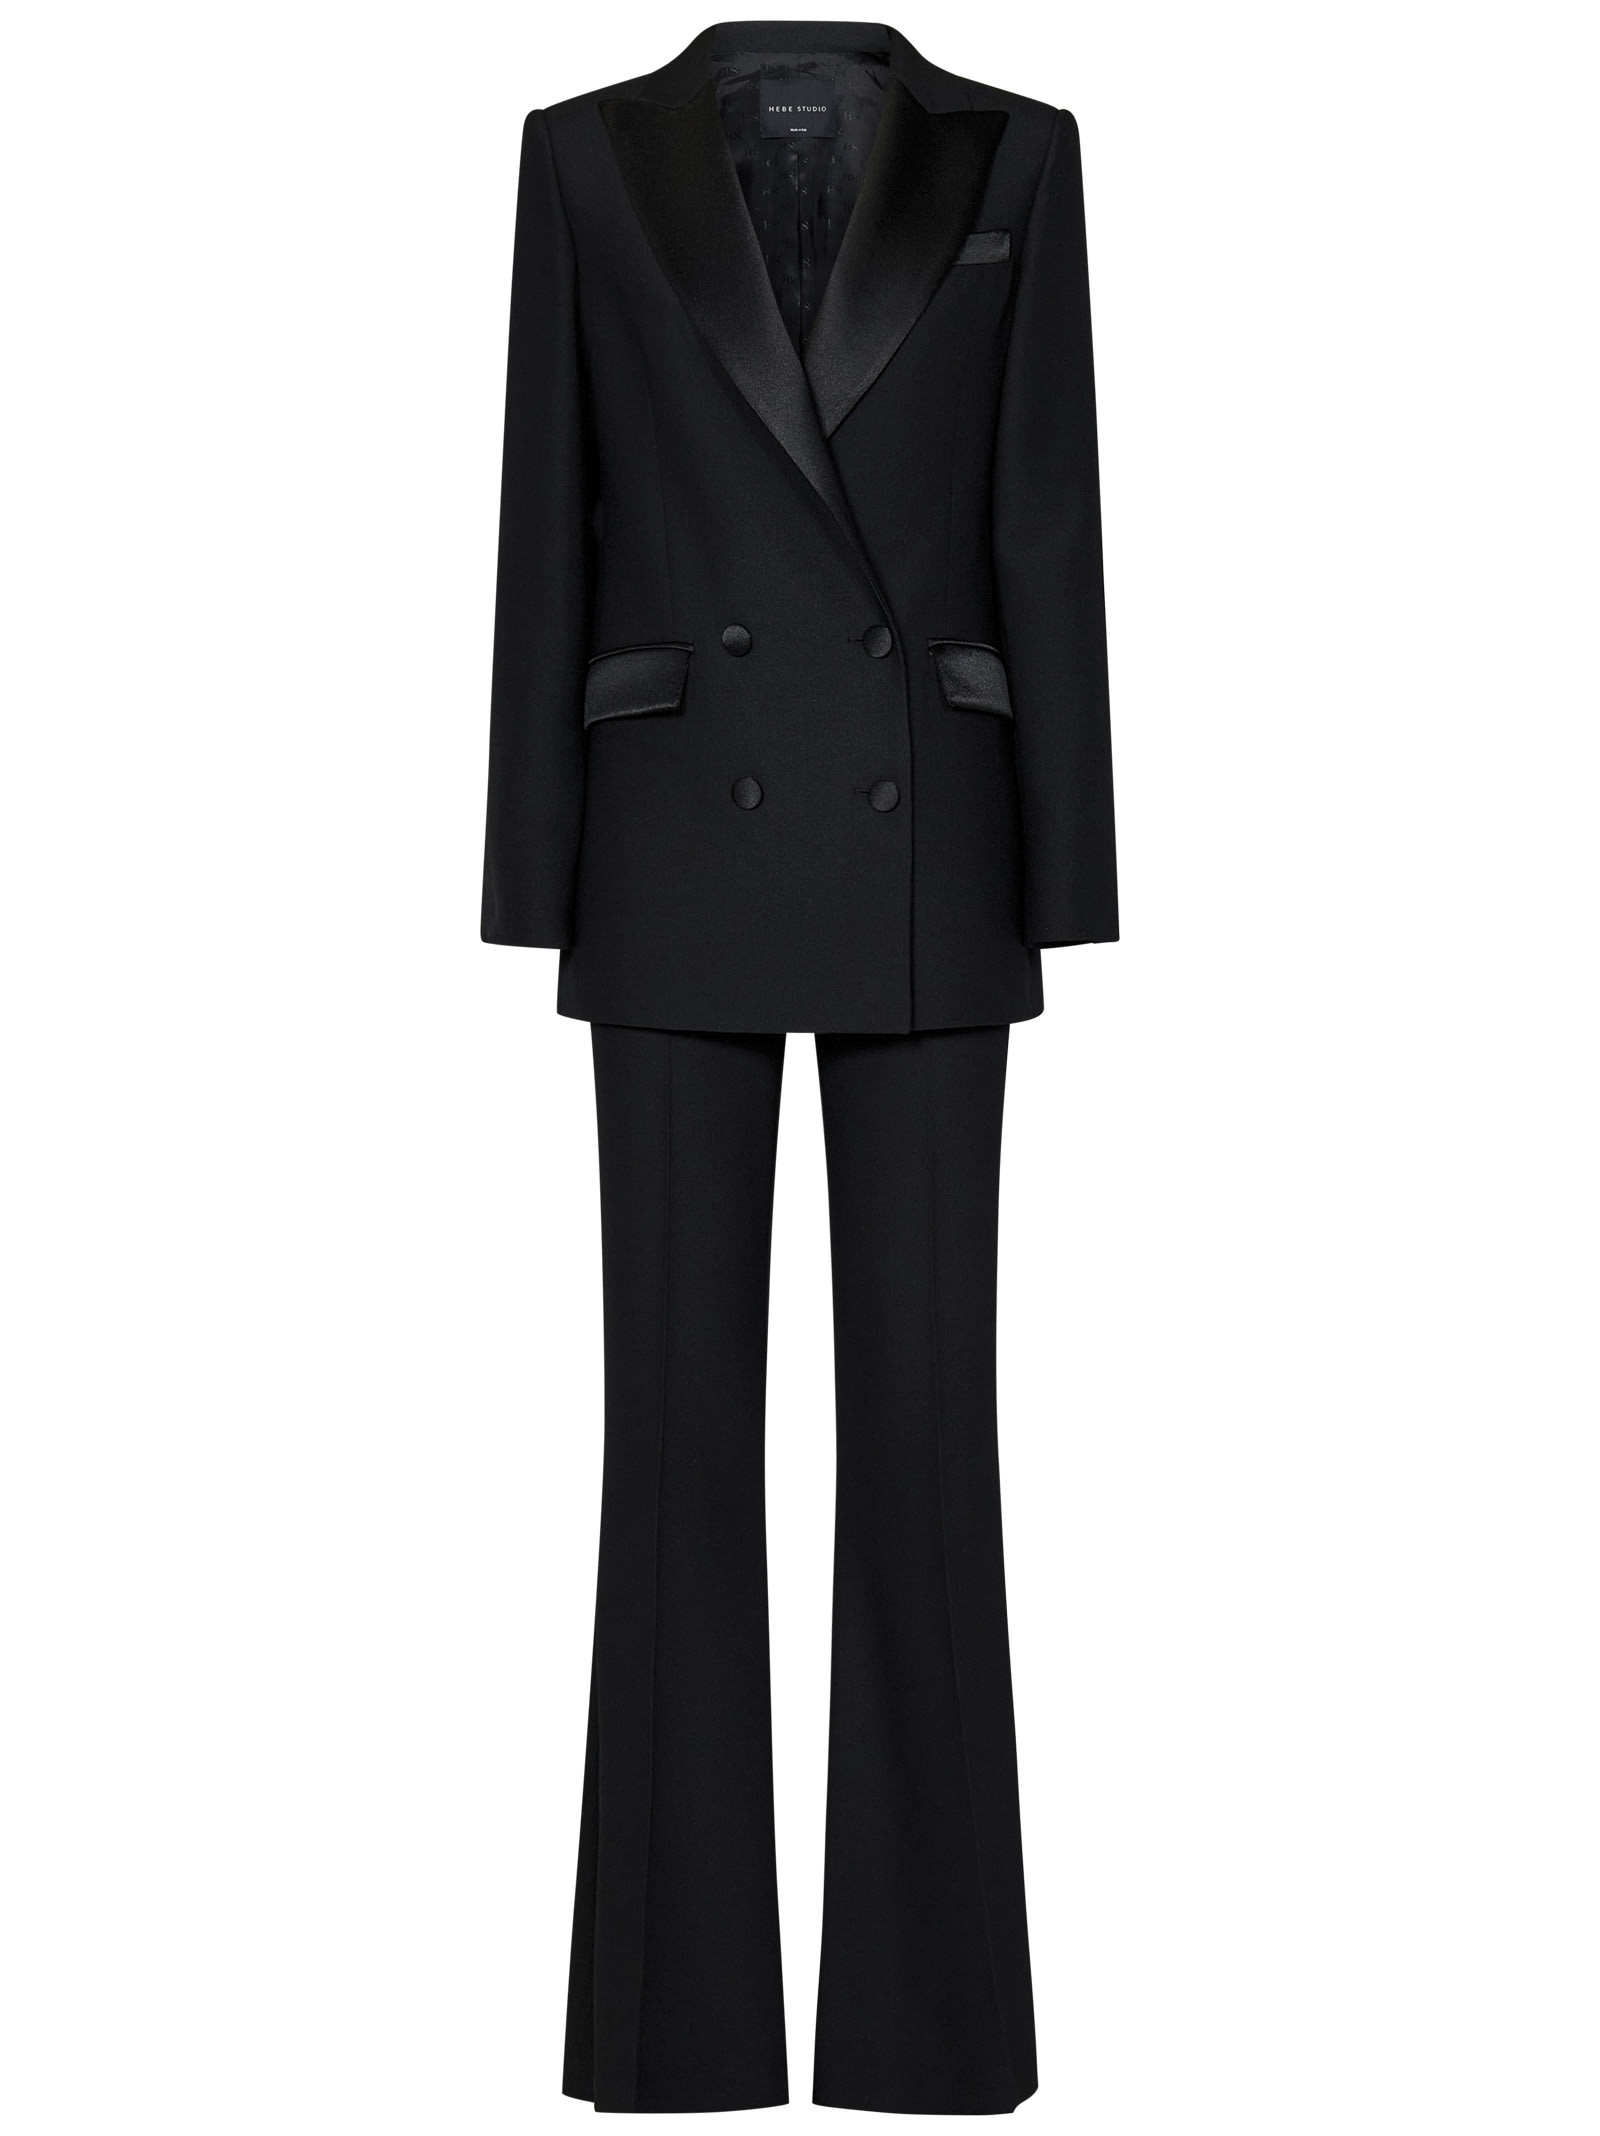 The Bianca Suit